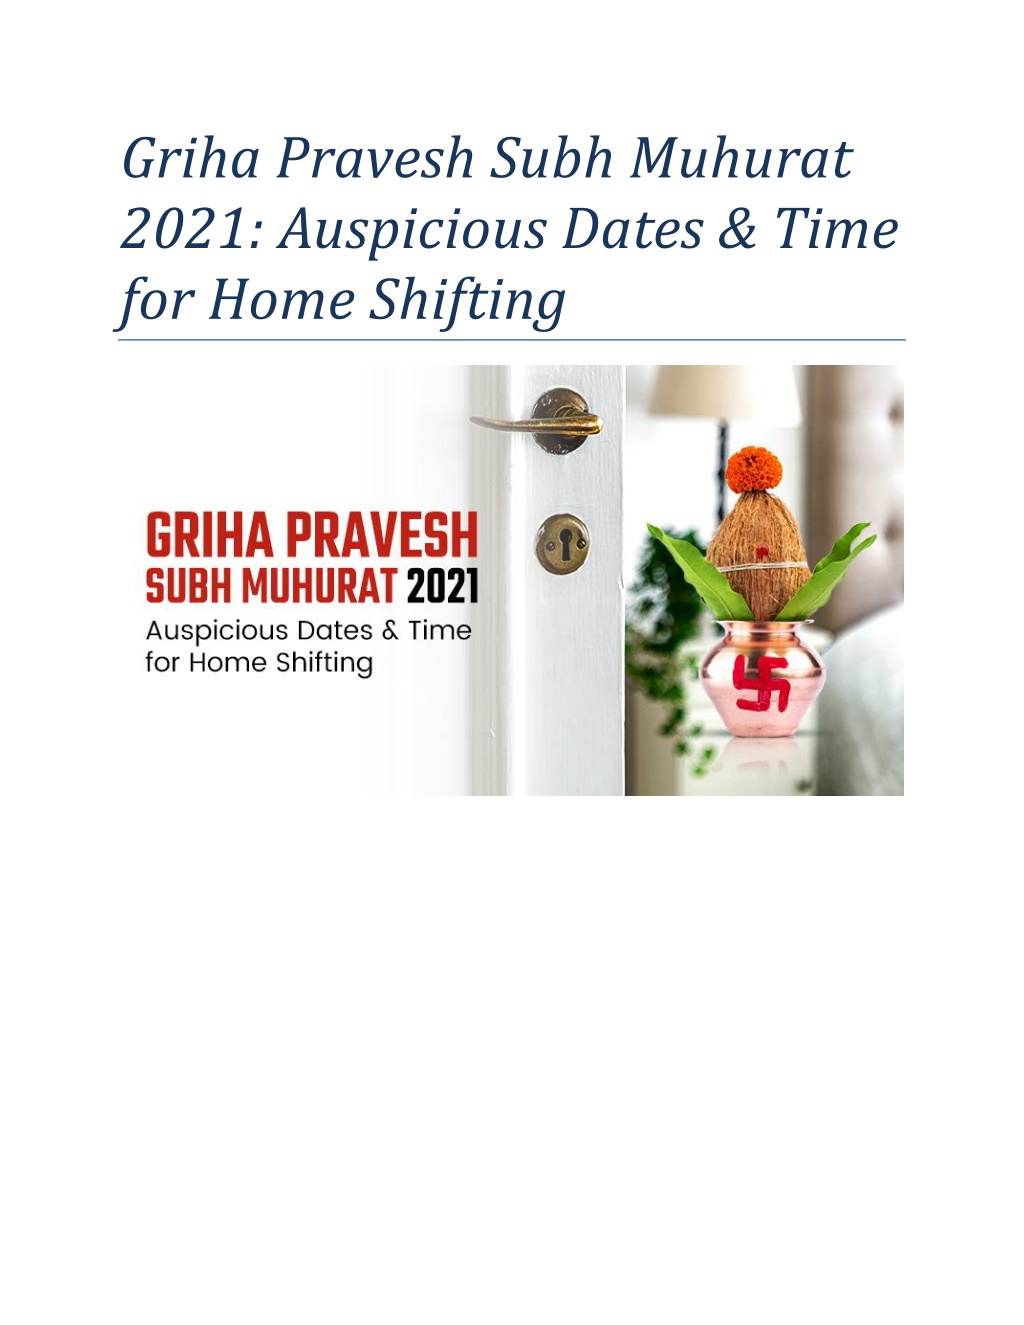 PPT Griha Pravesh Subh Muhurat 2021 Auspicious Dates & Time for Home